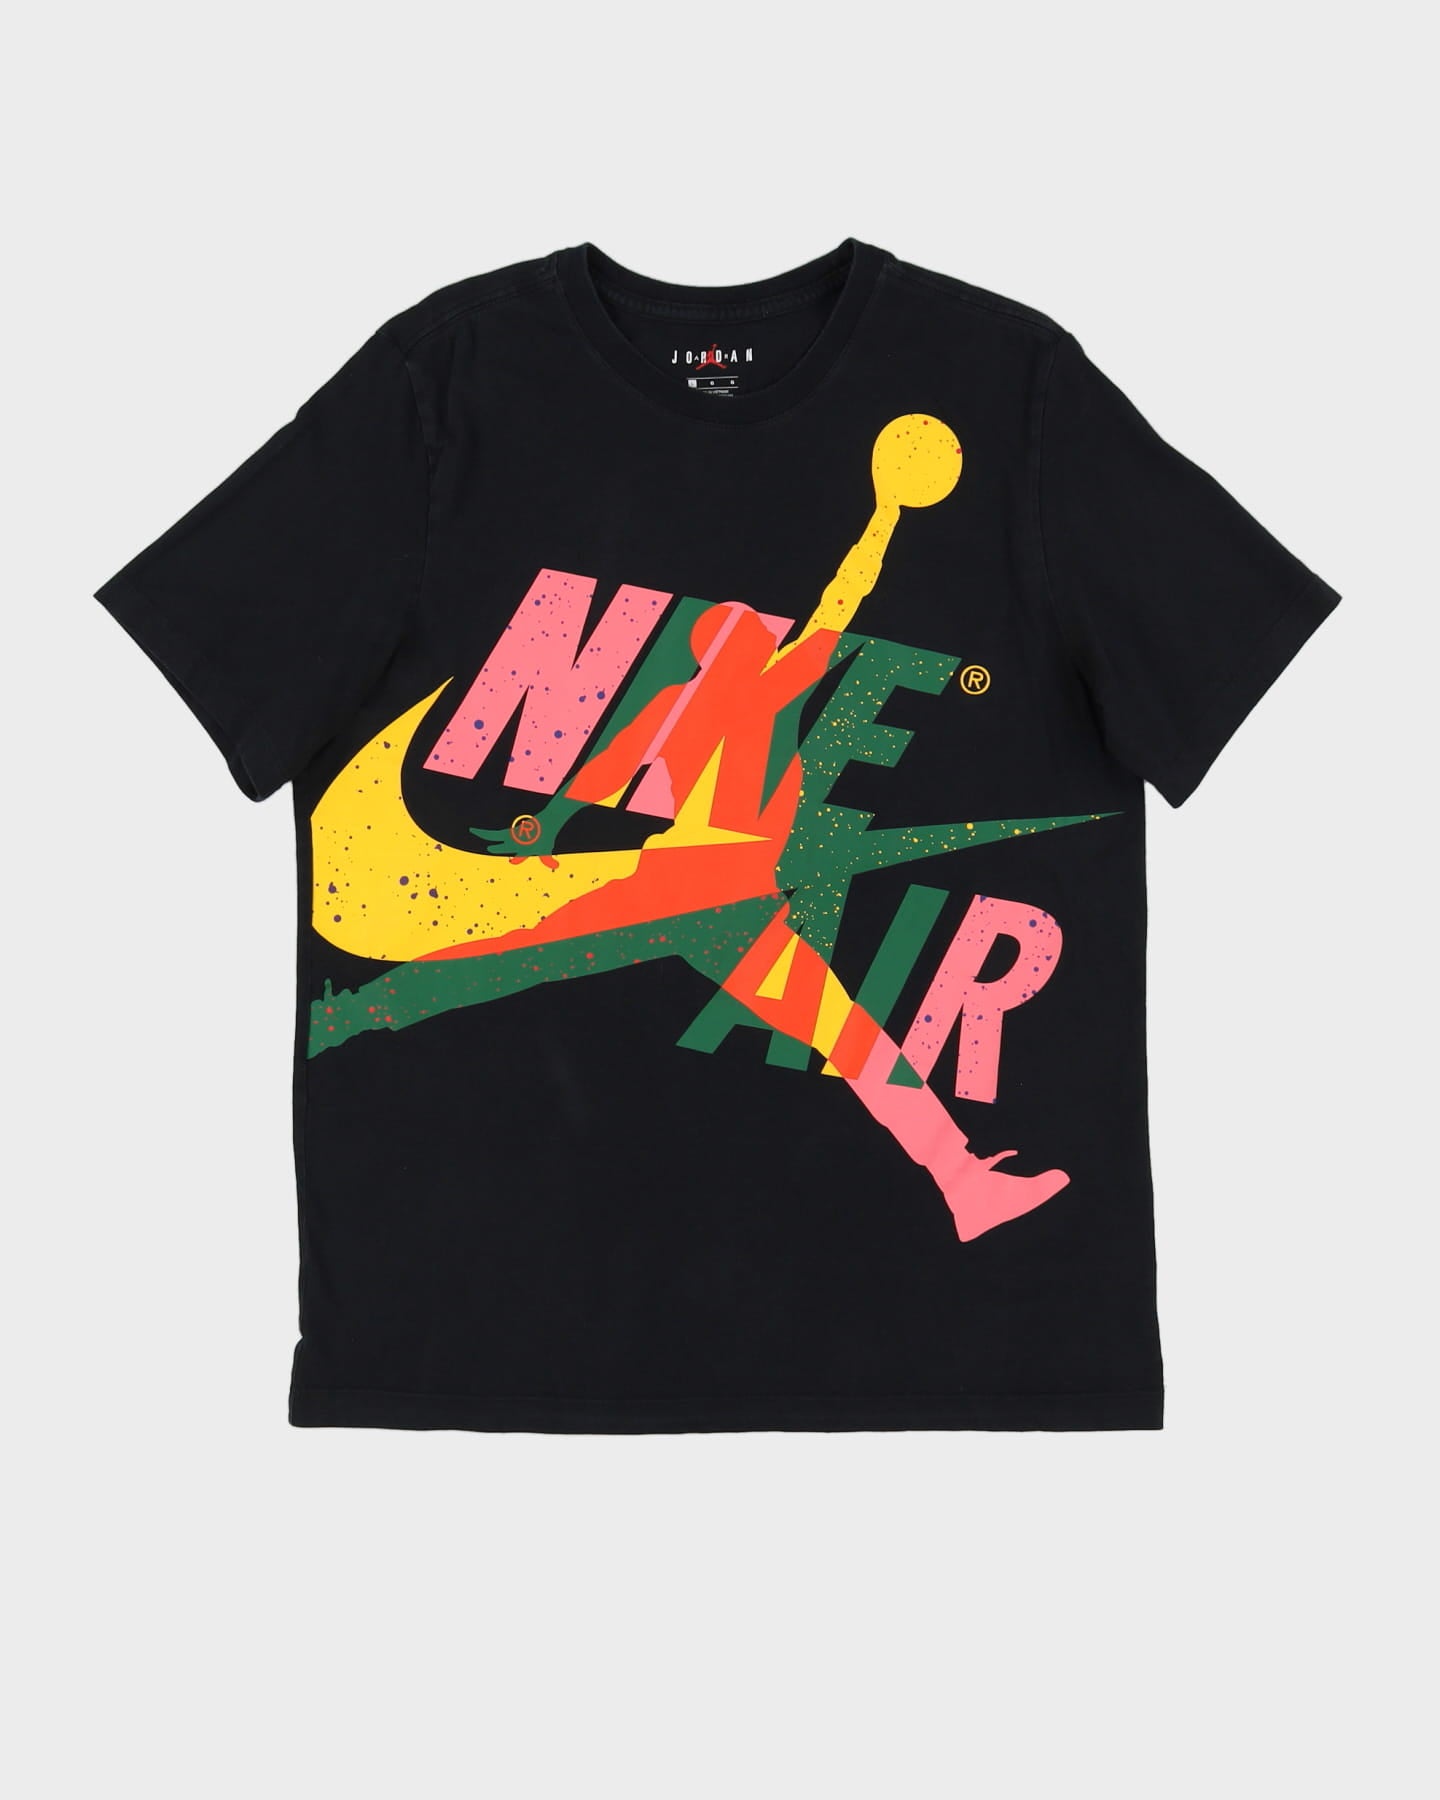 Nike Air Jordan Black T-Shirt - L